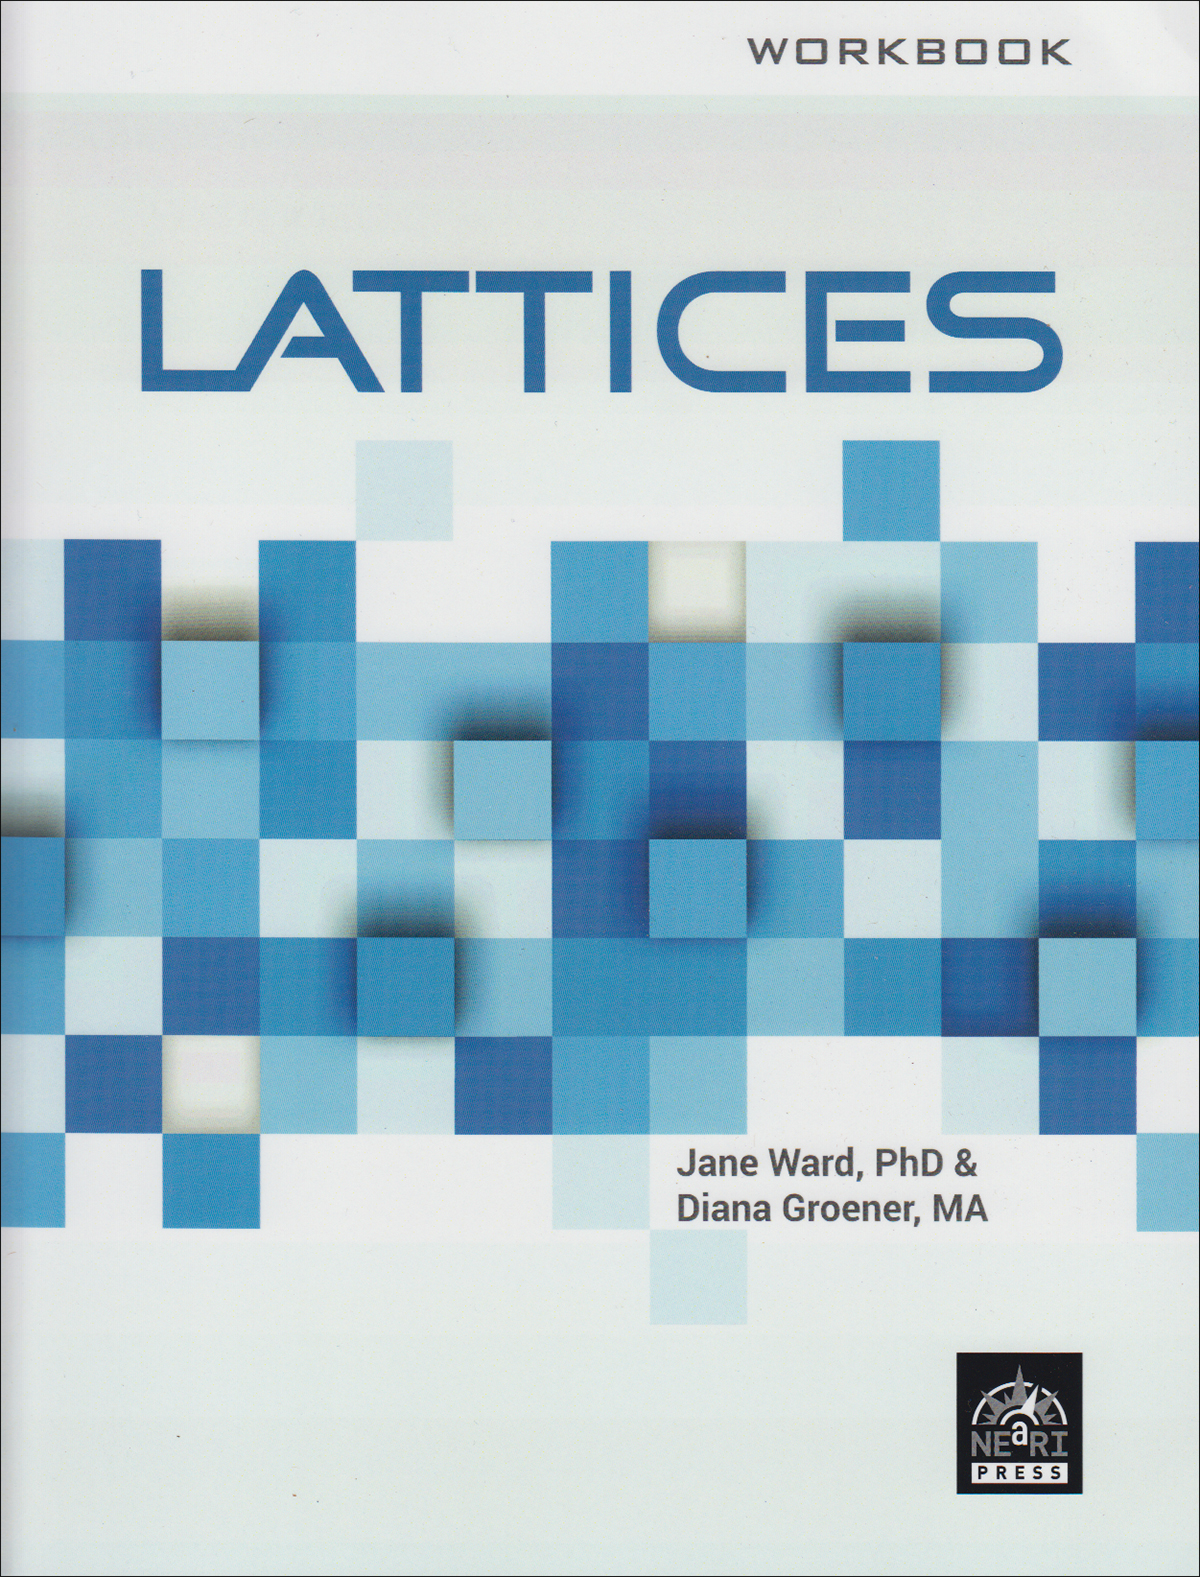 Lattices Workbook